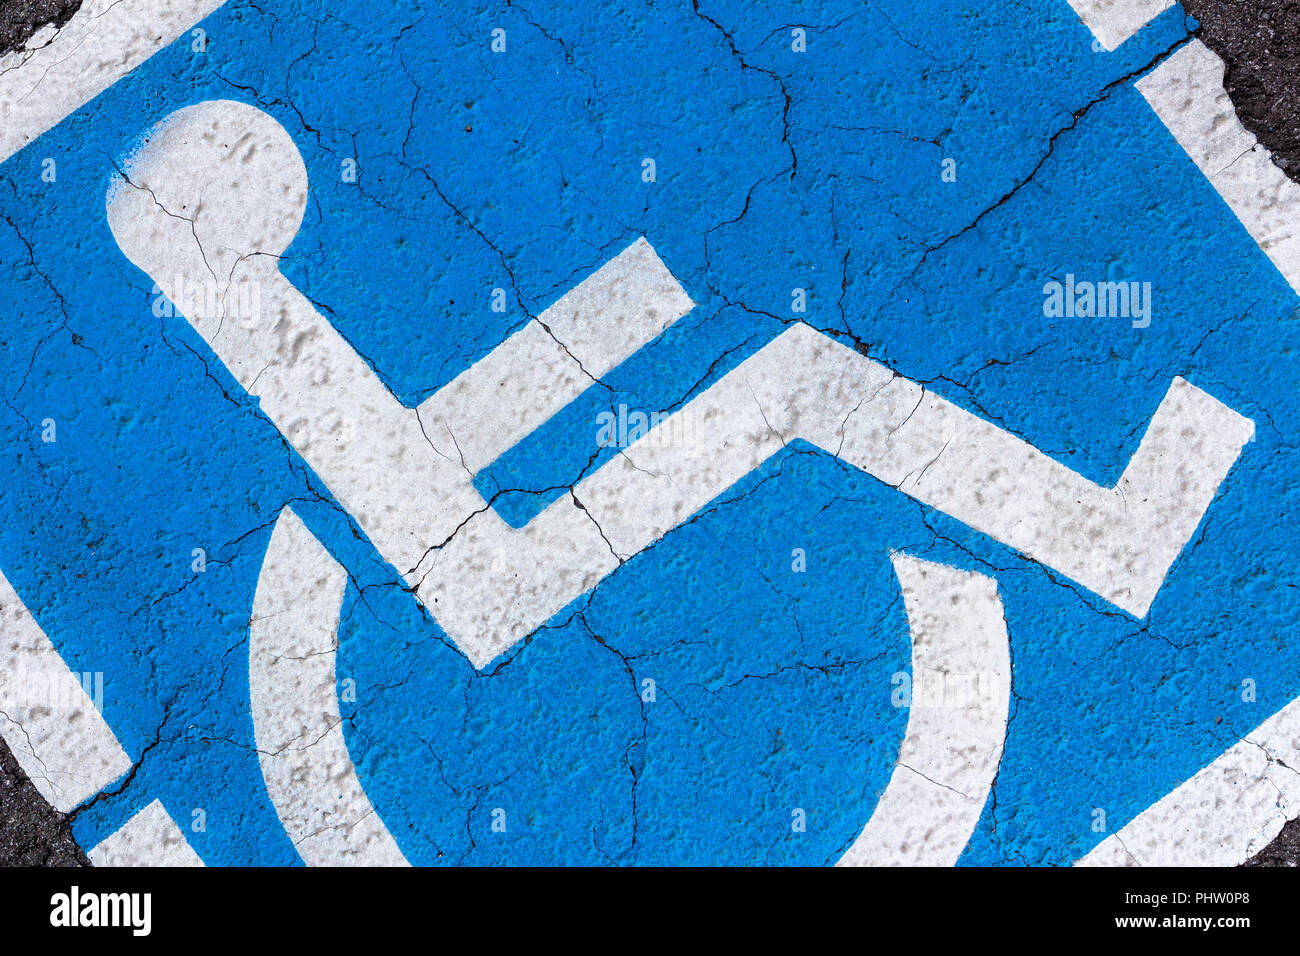 Simbolo disabili Foto Stock